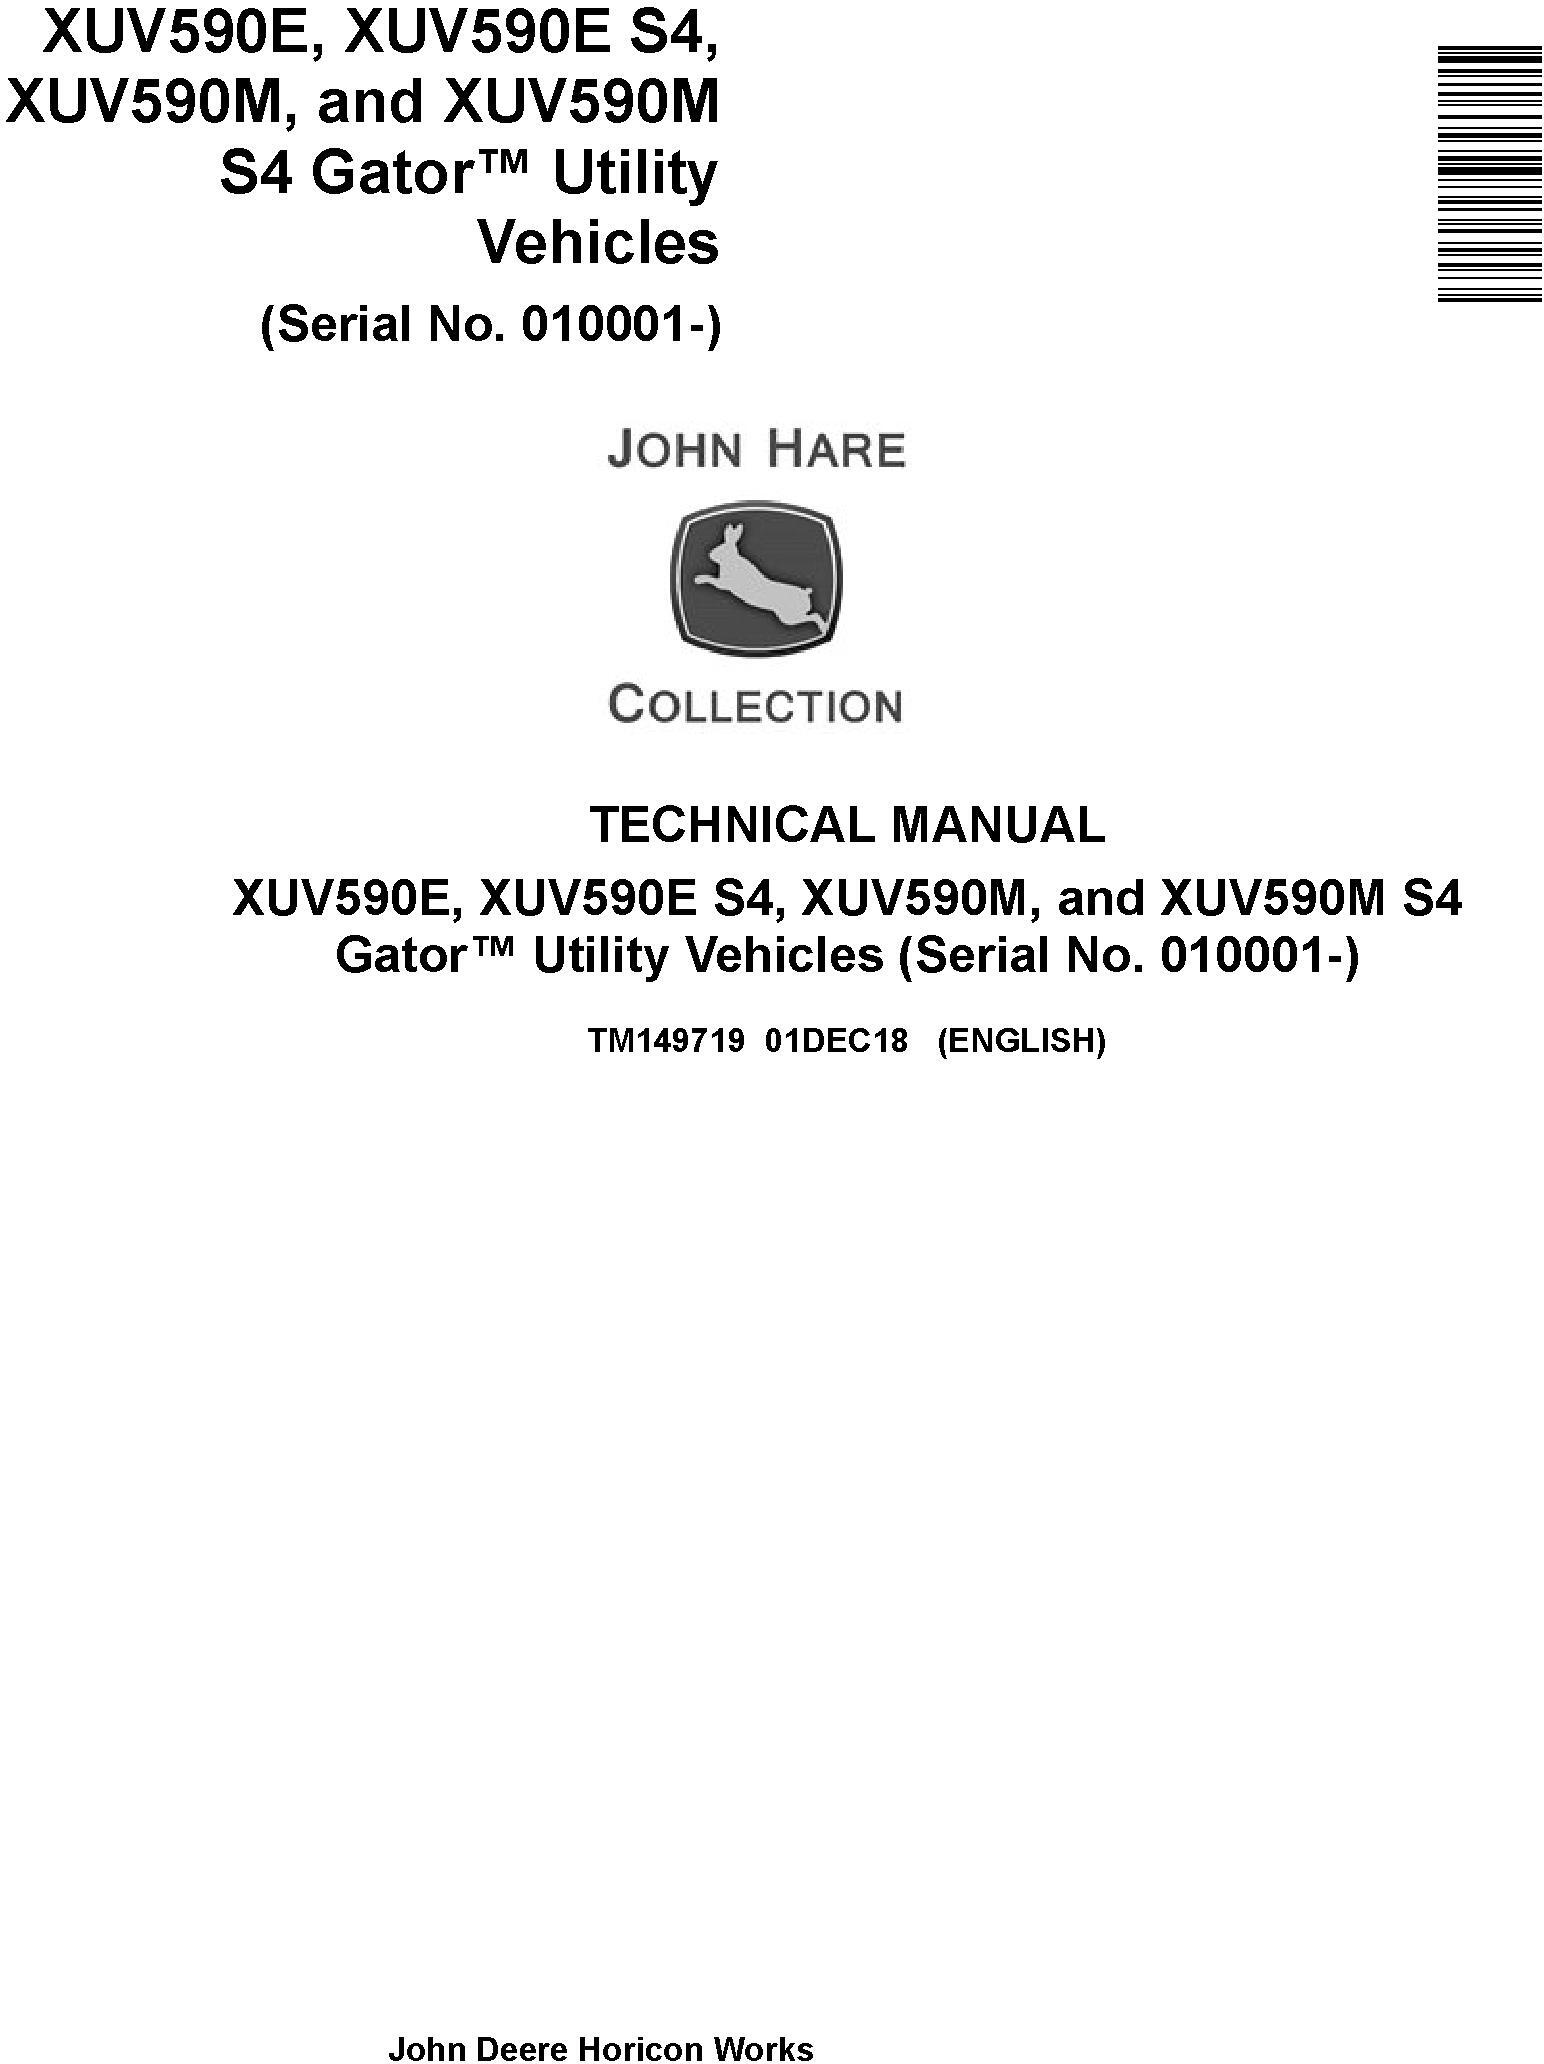 John Deere XUV590E(S4) XUV590E(S4) Gator Utility Vehicles Technical Manual TM149719